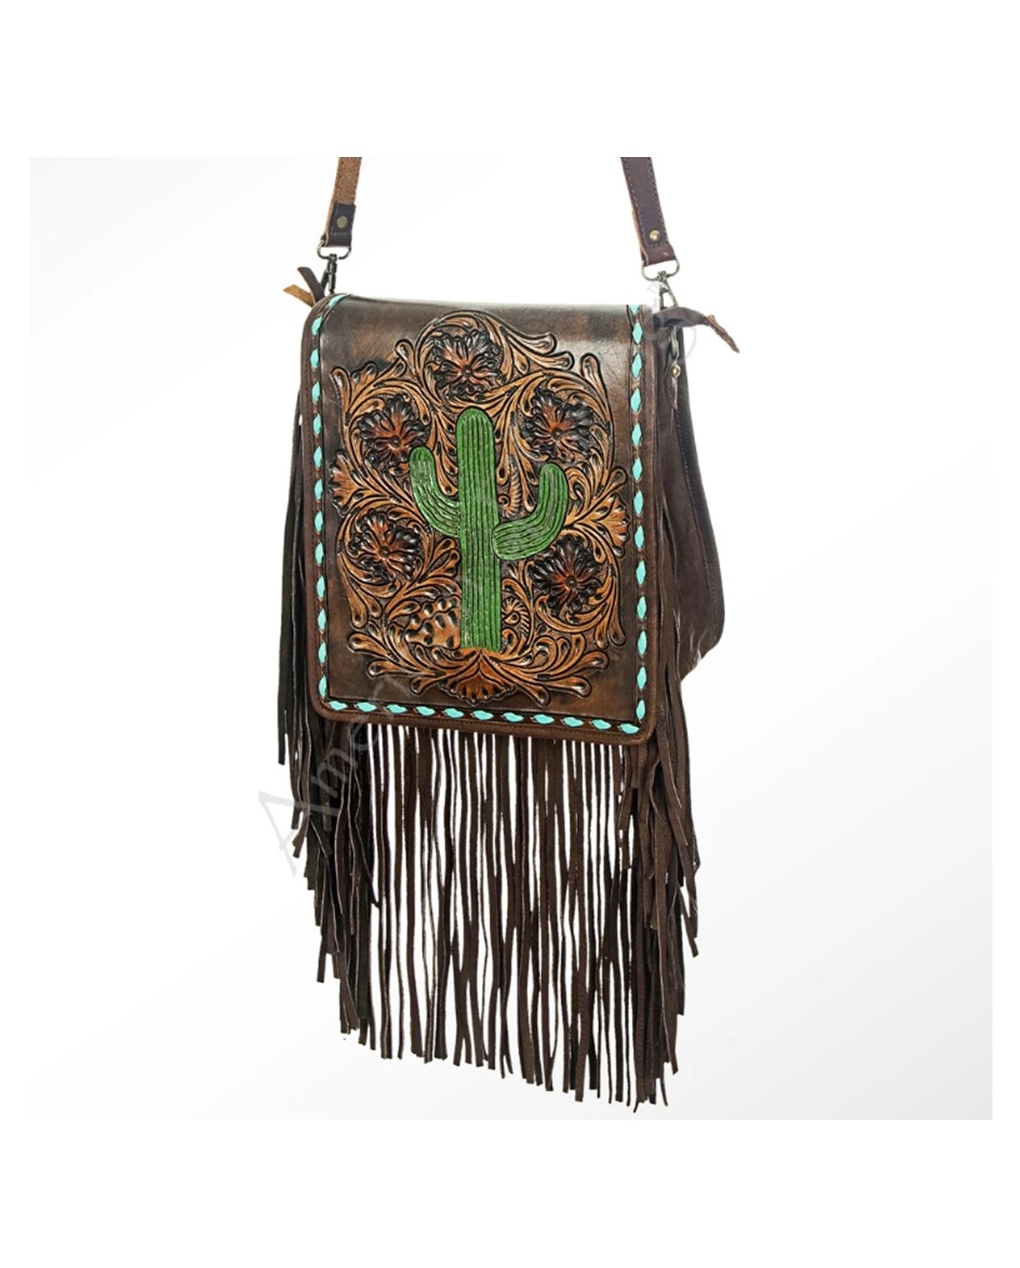 Bags & Purses Handbags Wristlets cactus purse Cactus theme wristlet 